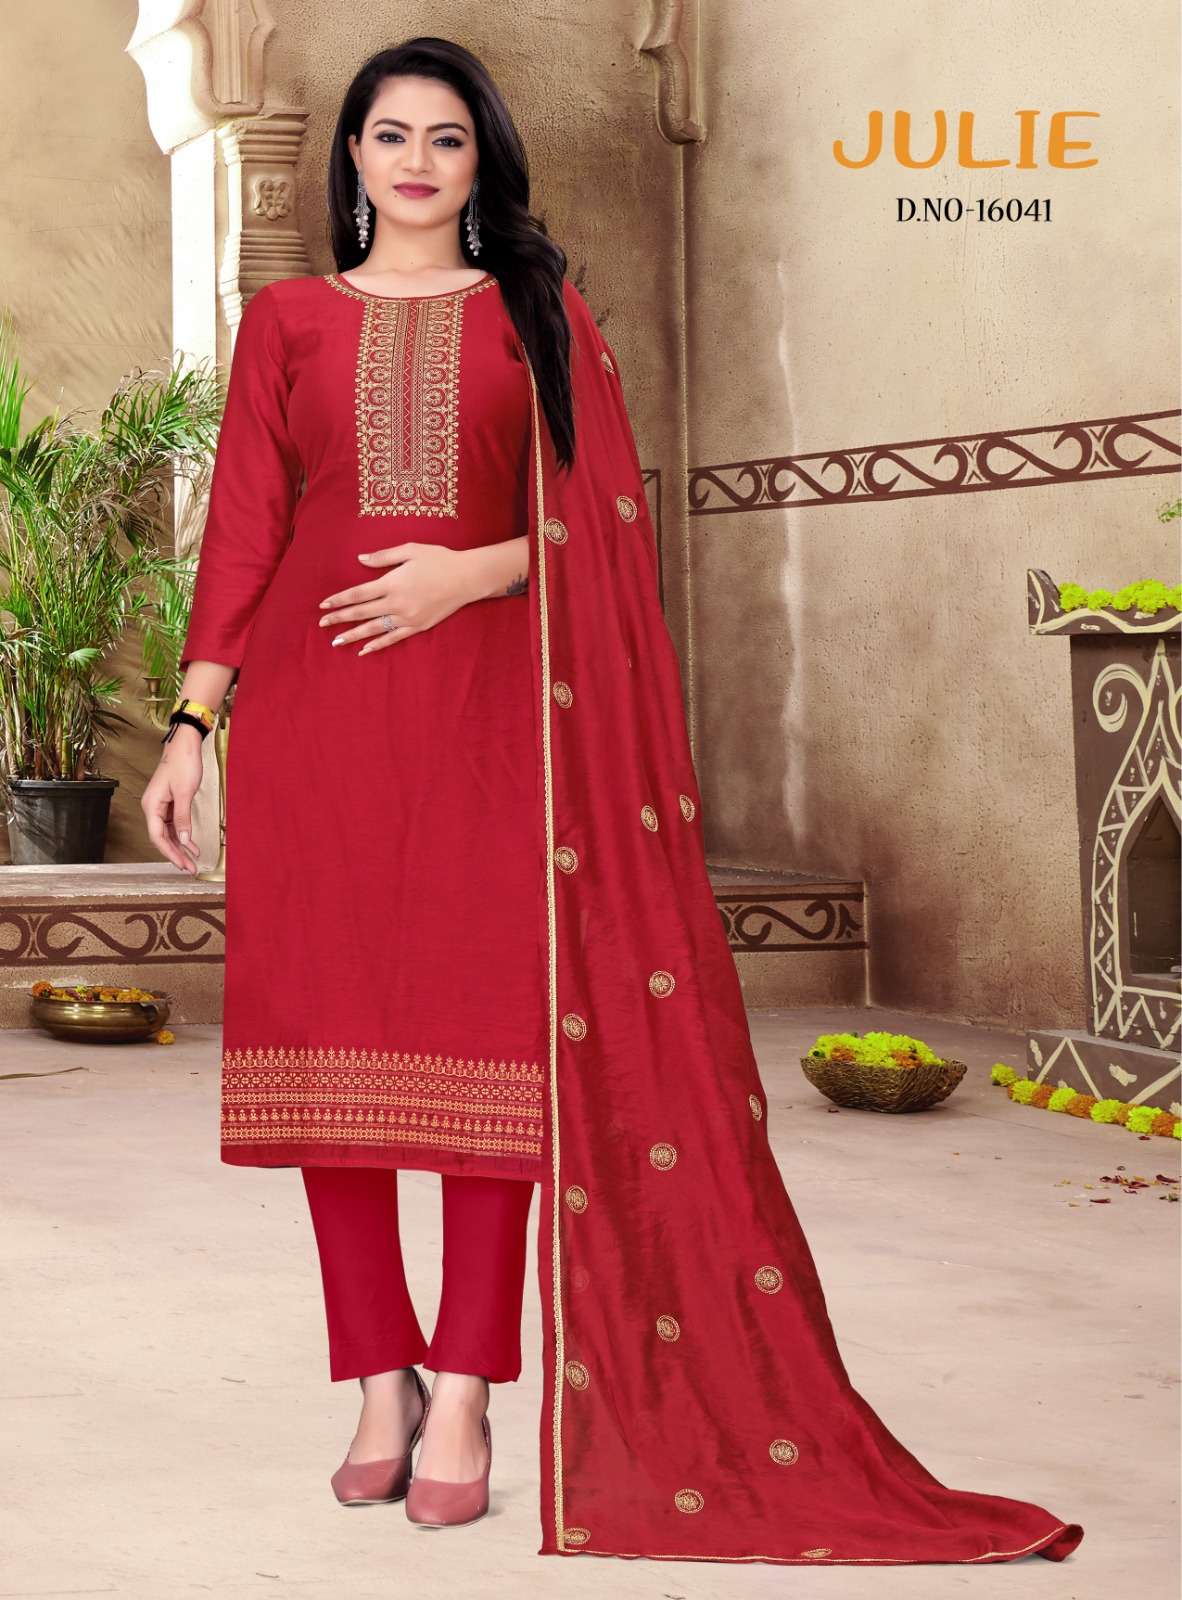 panch ratna julie 16041-16044 series muslin silk with work designer salwar kameez catalogue wholesaler surat 